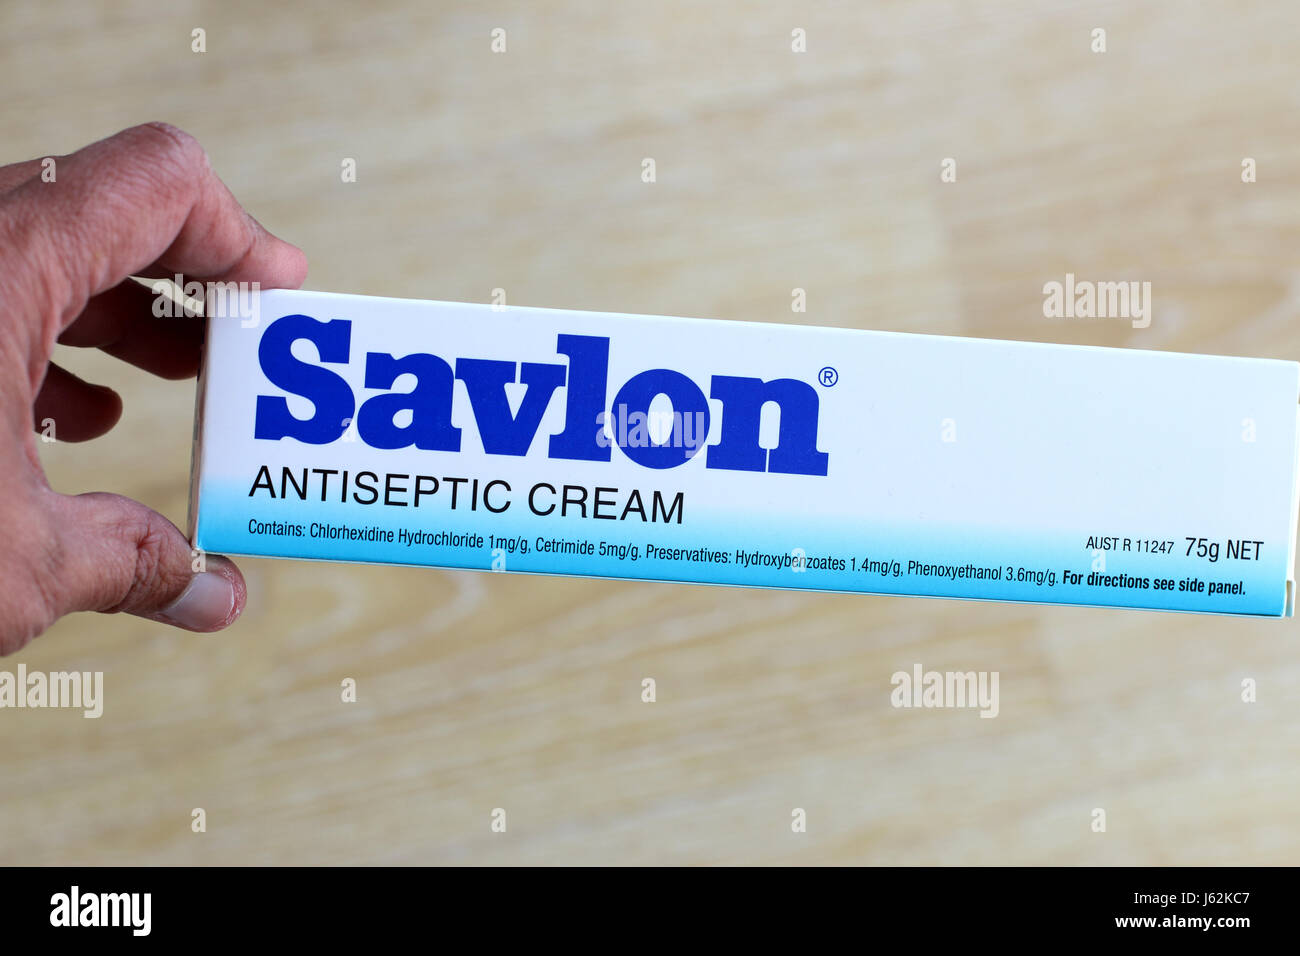 Savlon antiseptic cream Stock Photo